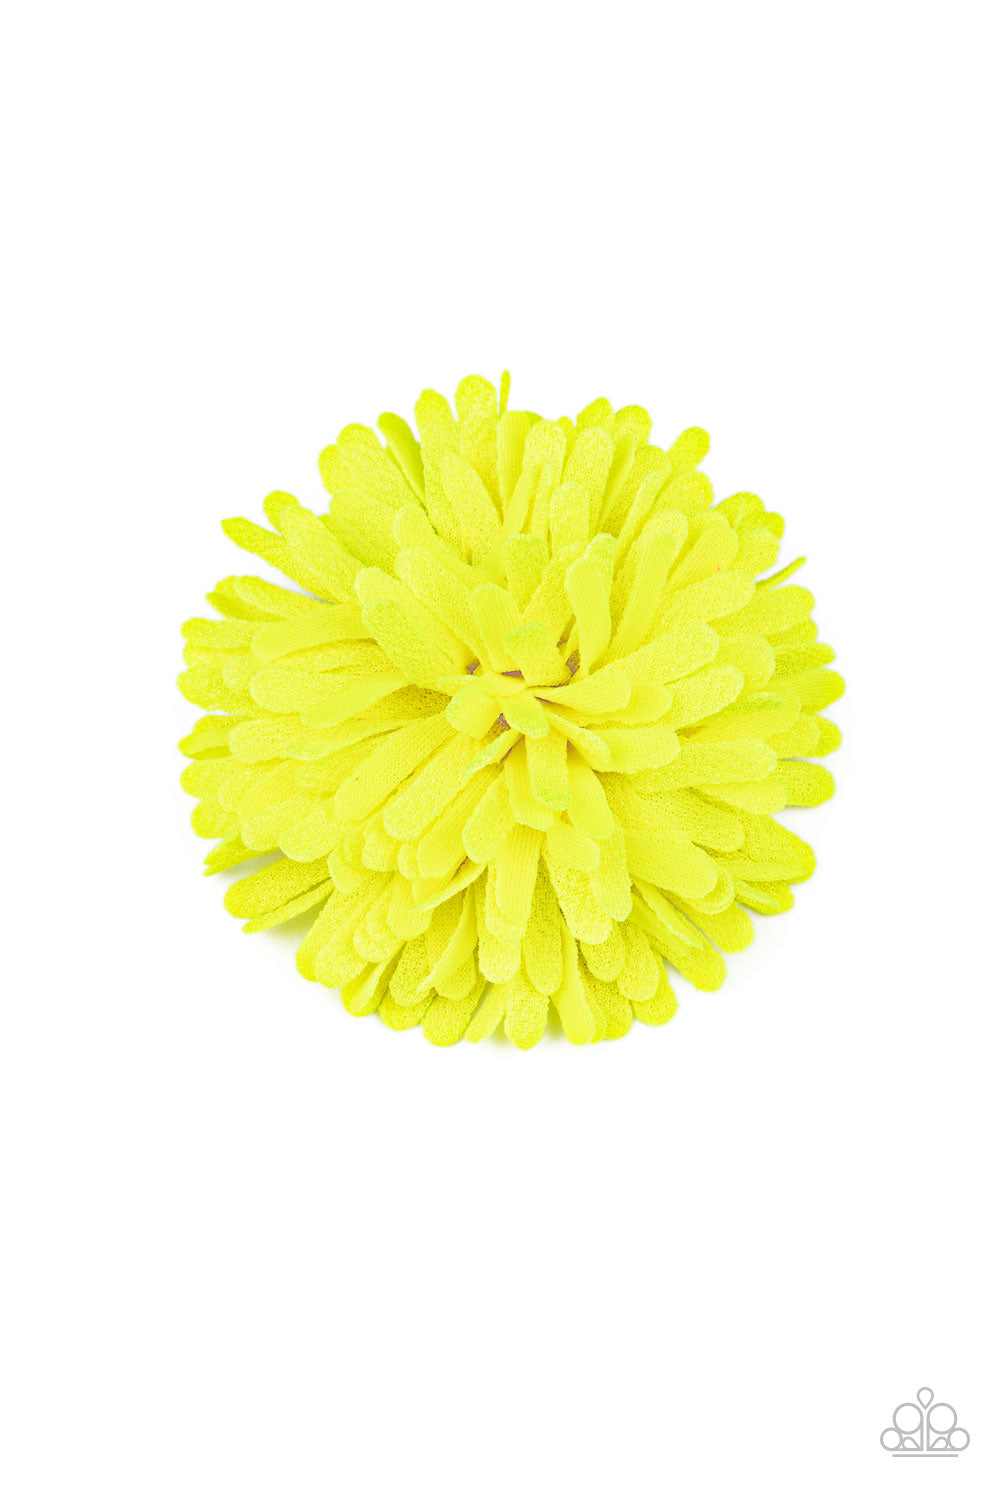 neon-garden-yellow-p7ss-ywxx-060xx